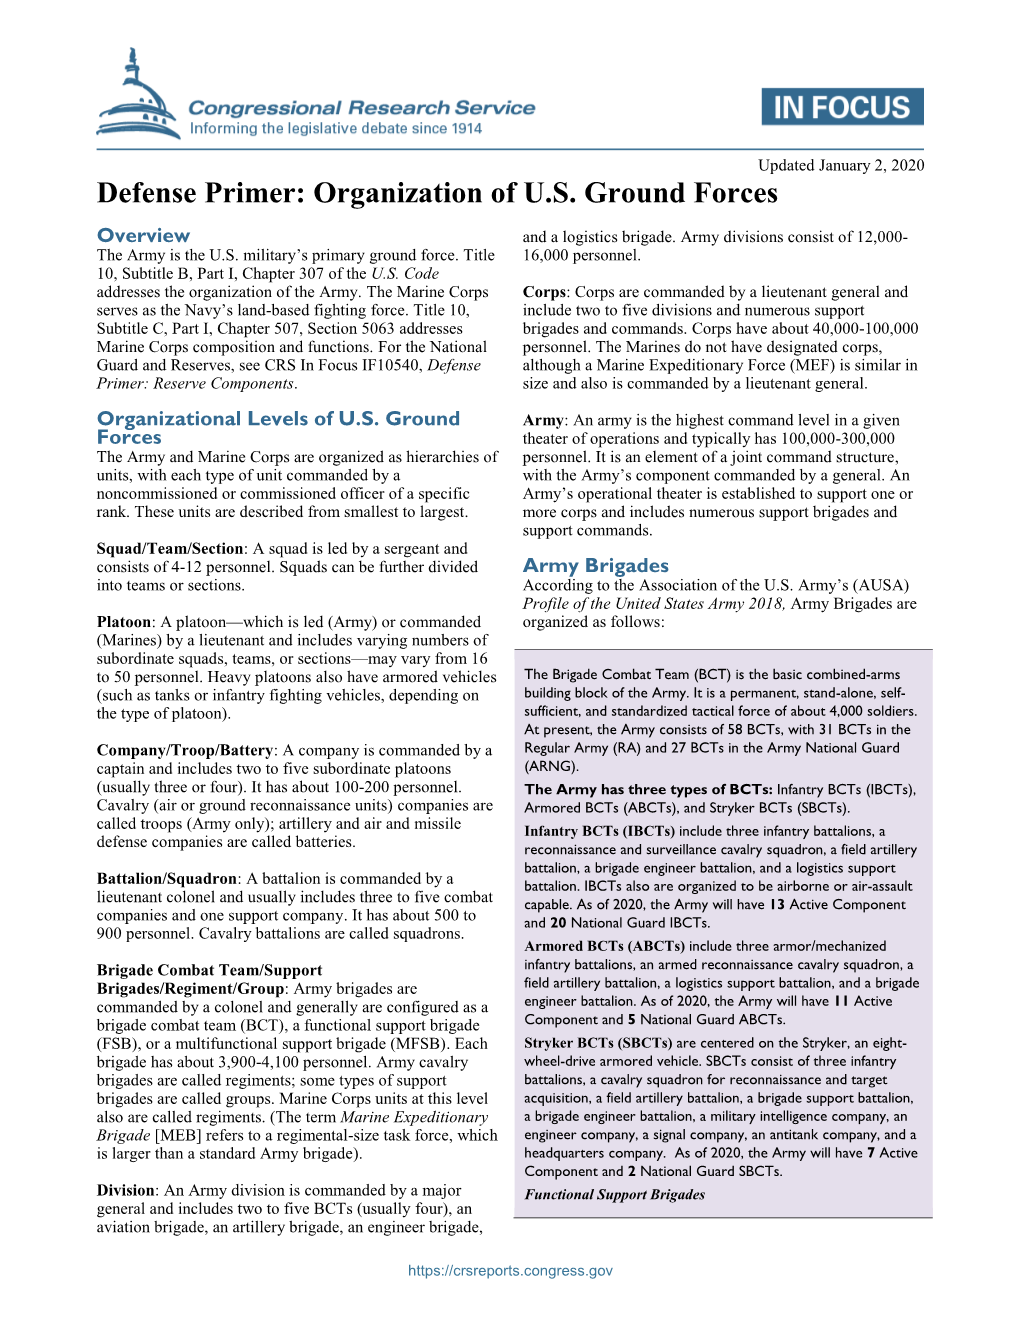 Defense Primer: Organization of U.S. Ground Forces